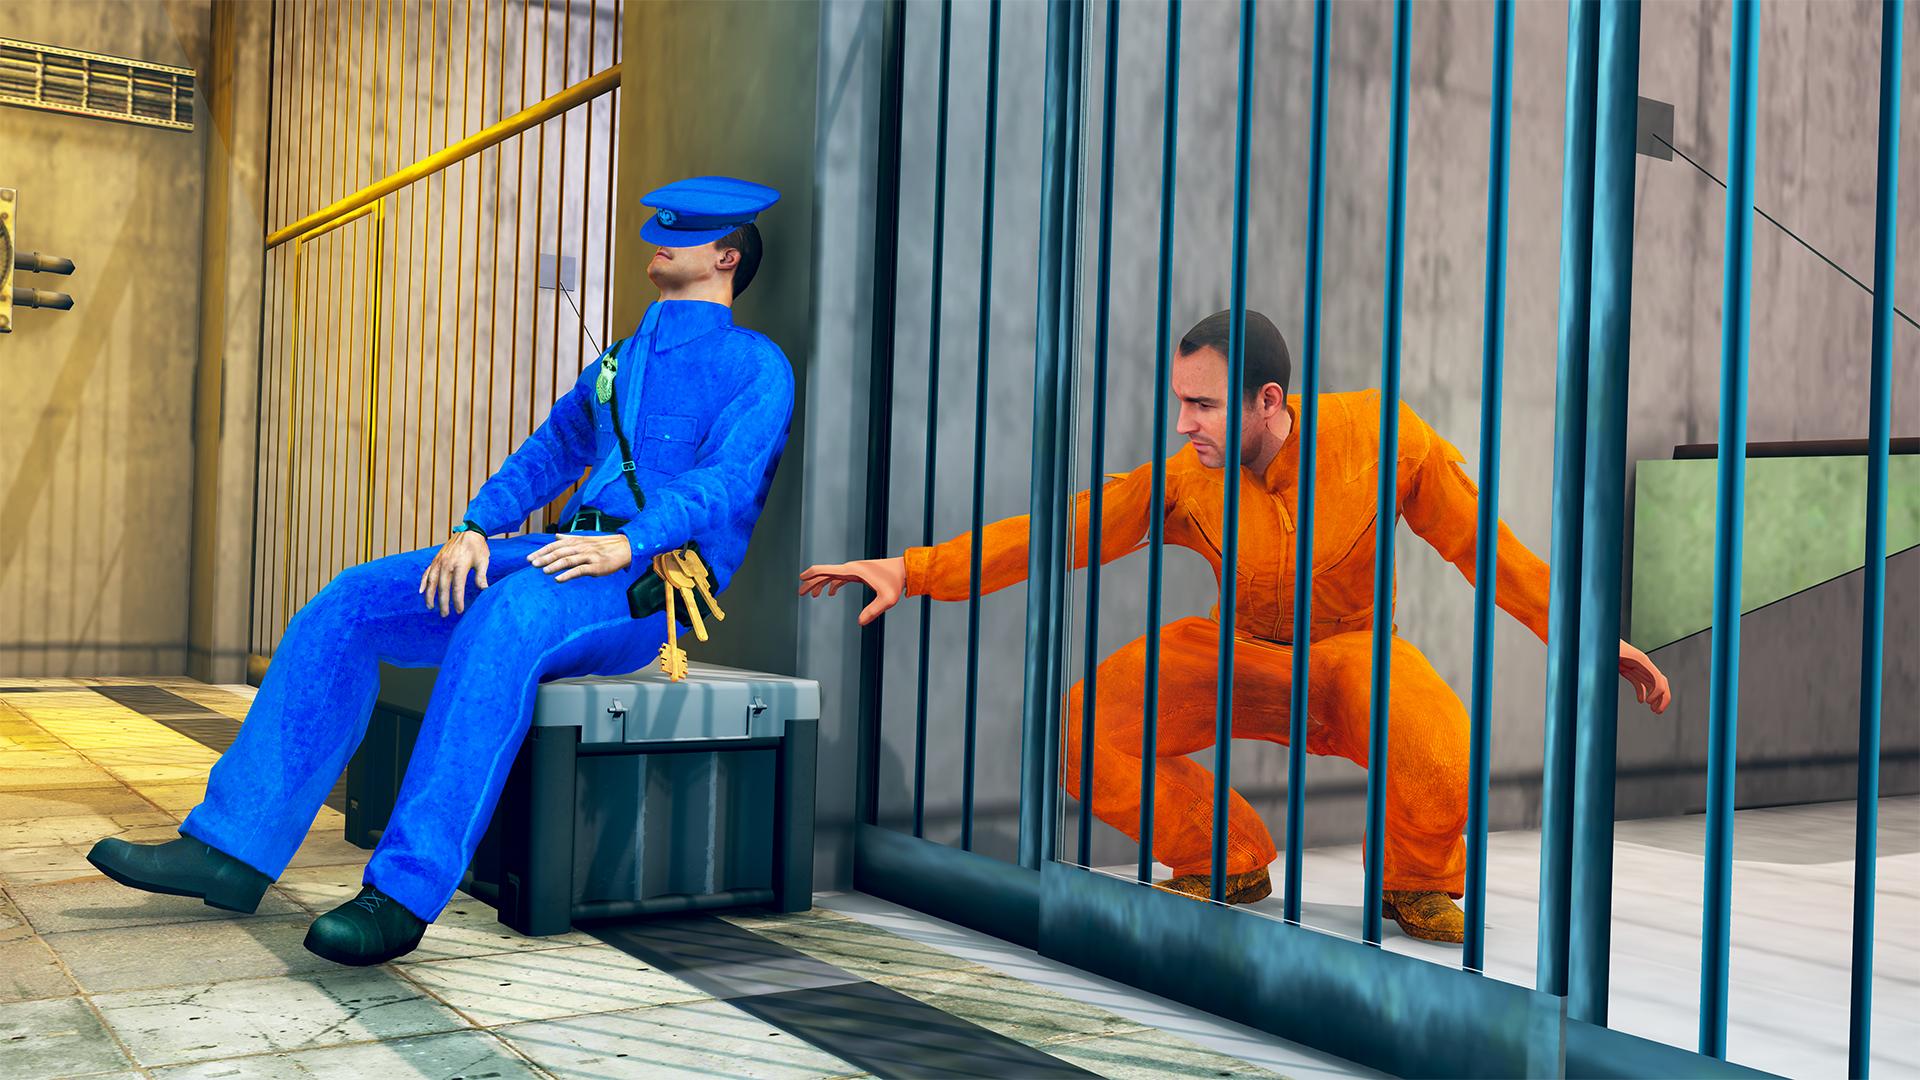 Prison Escape Grand Jail Break APK for Android Download